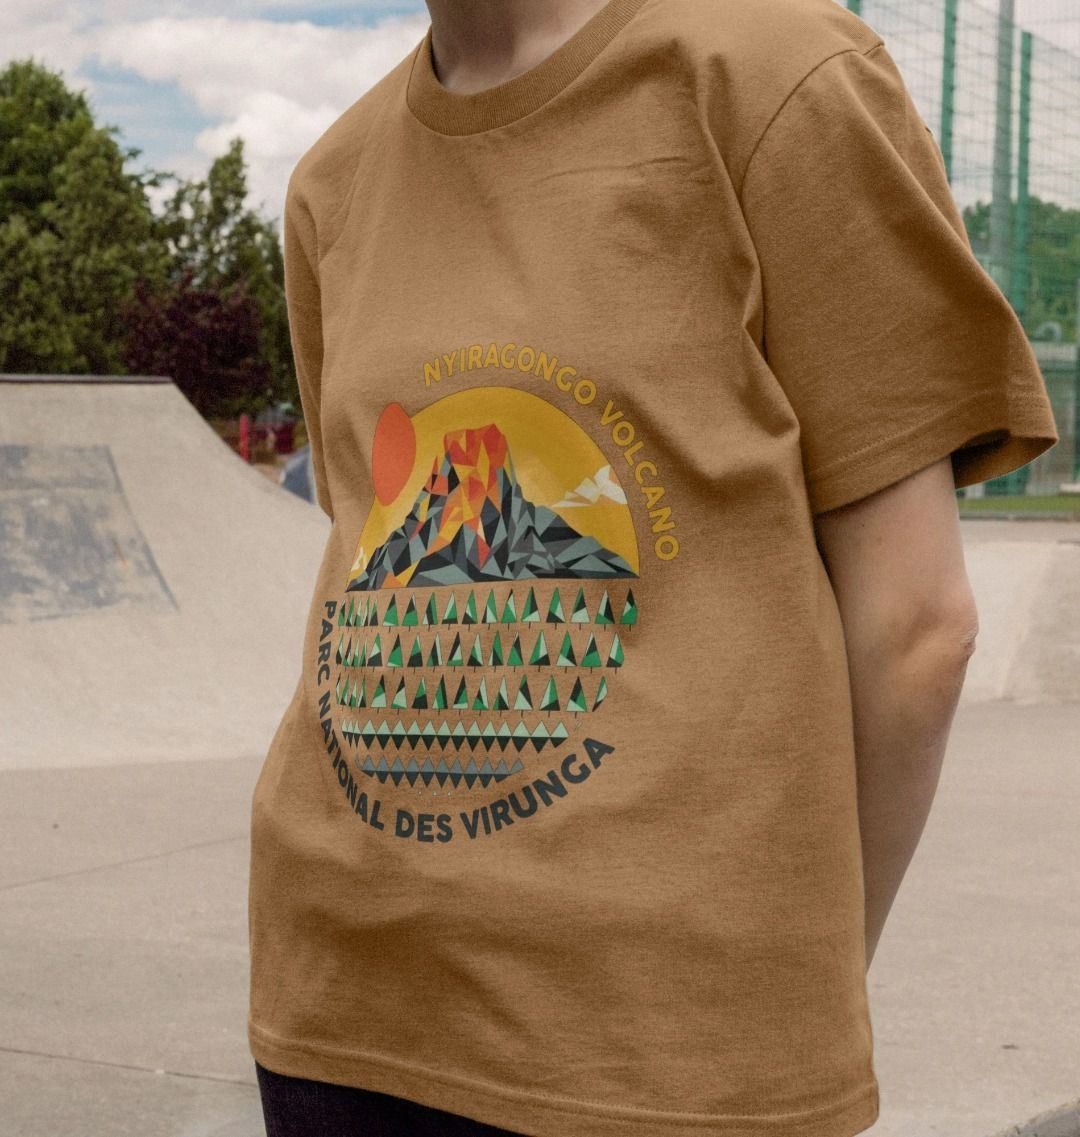 Nyiragongo Volcano Women's T-shirt